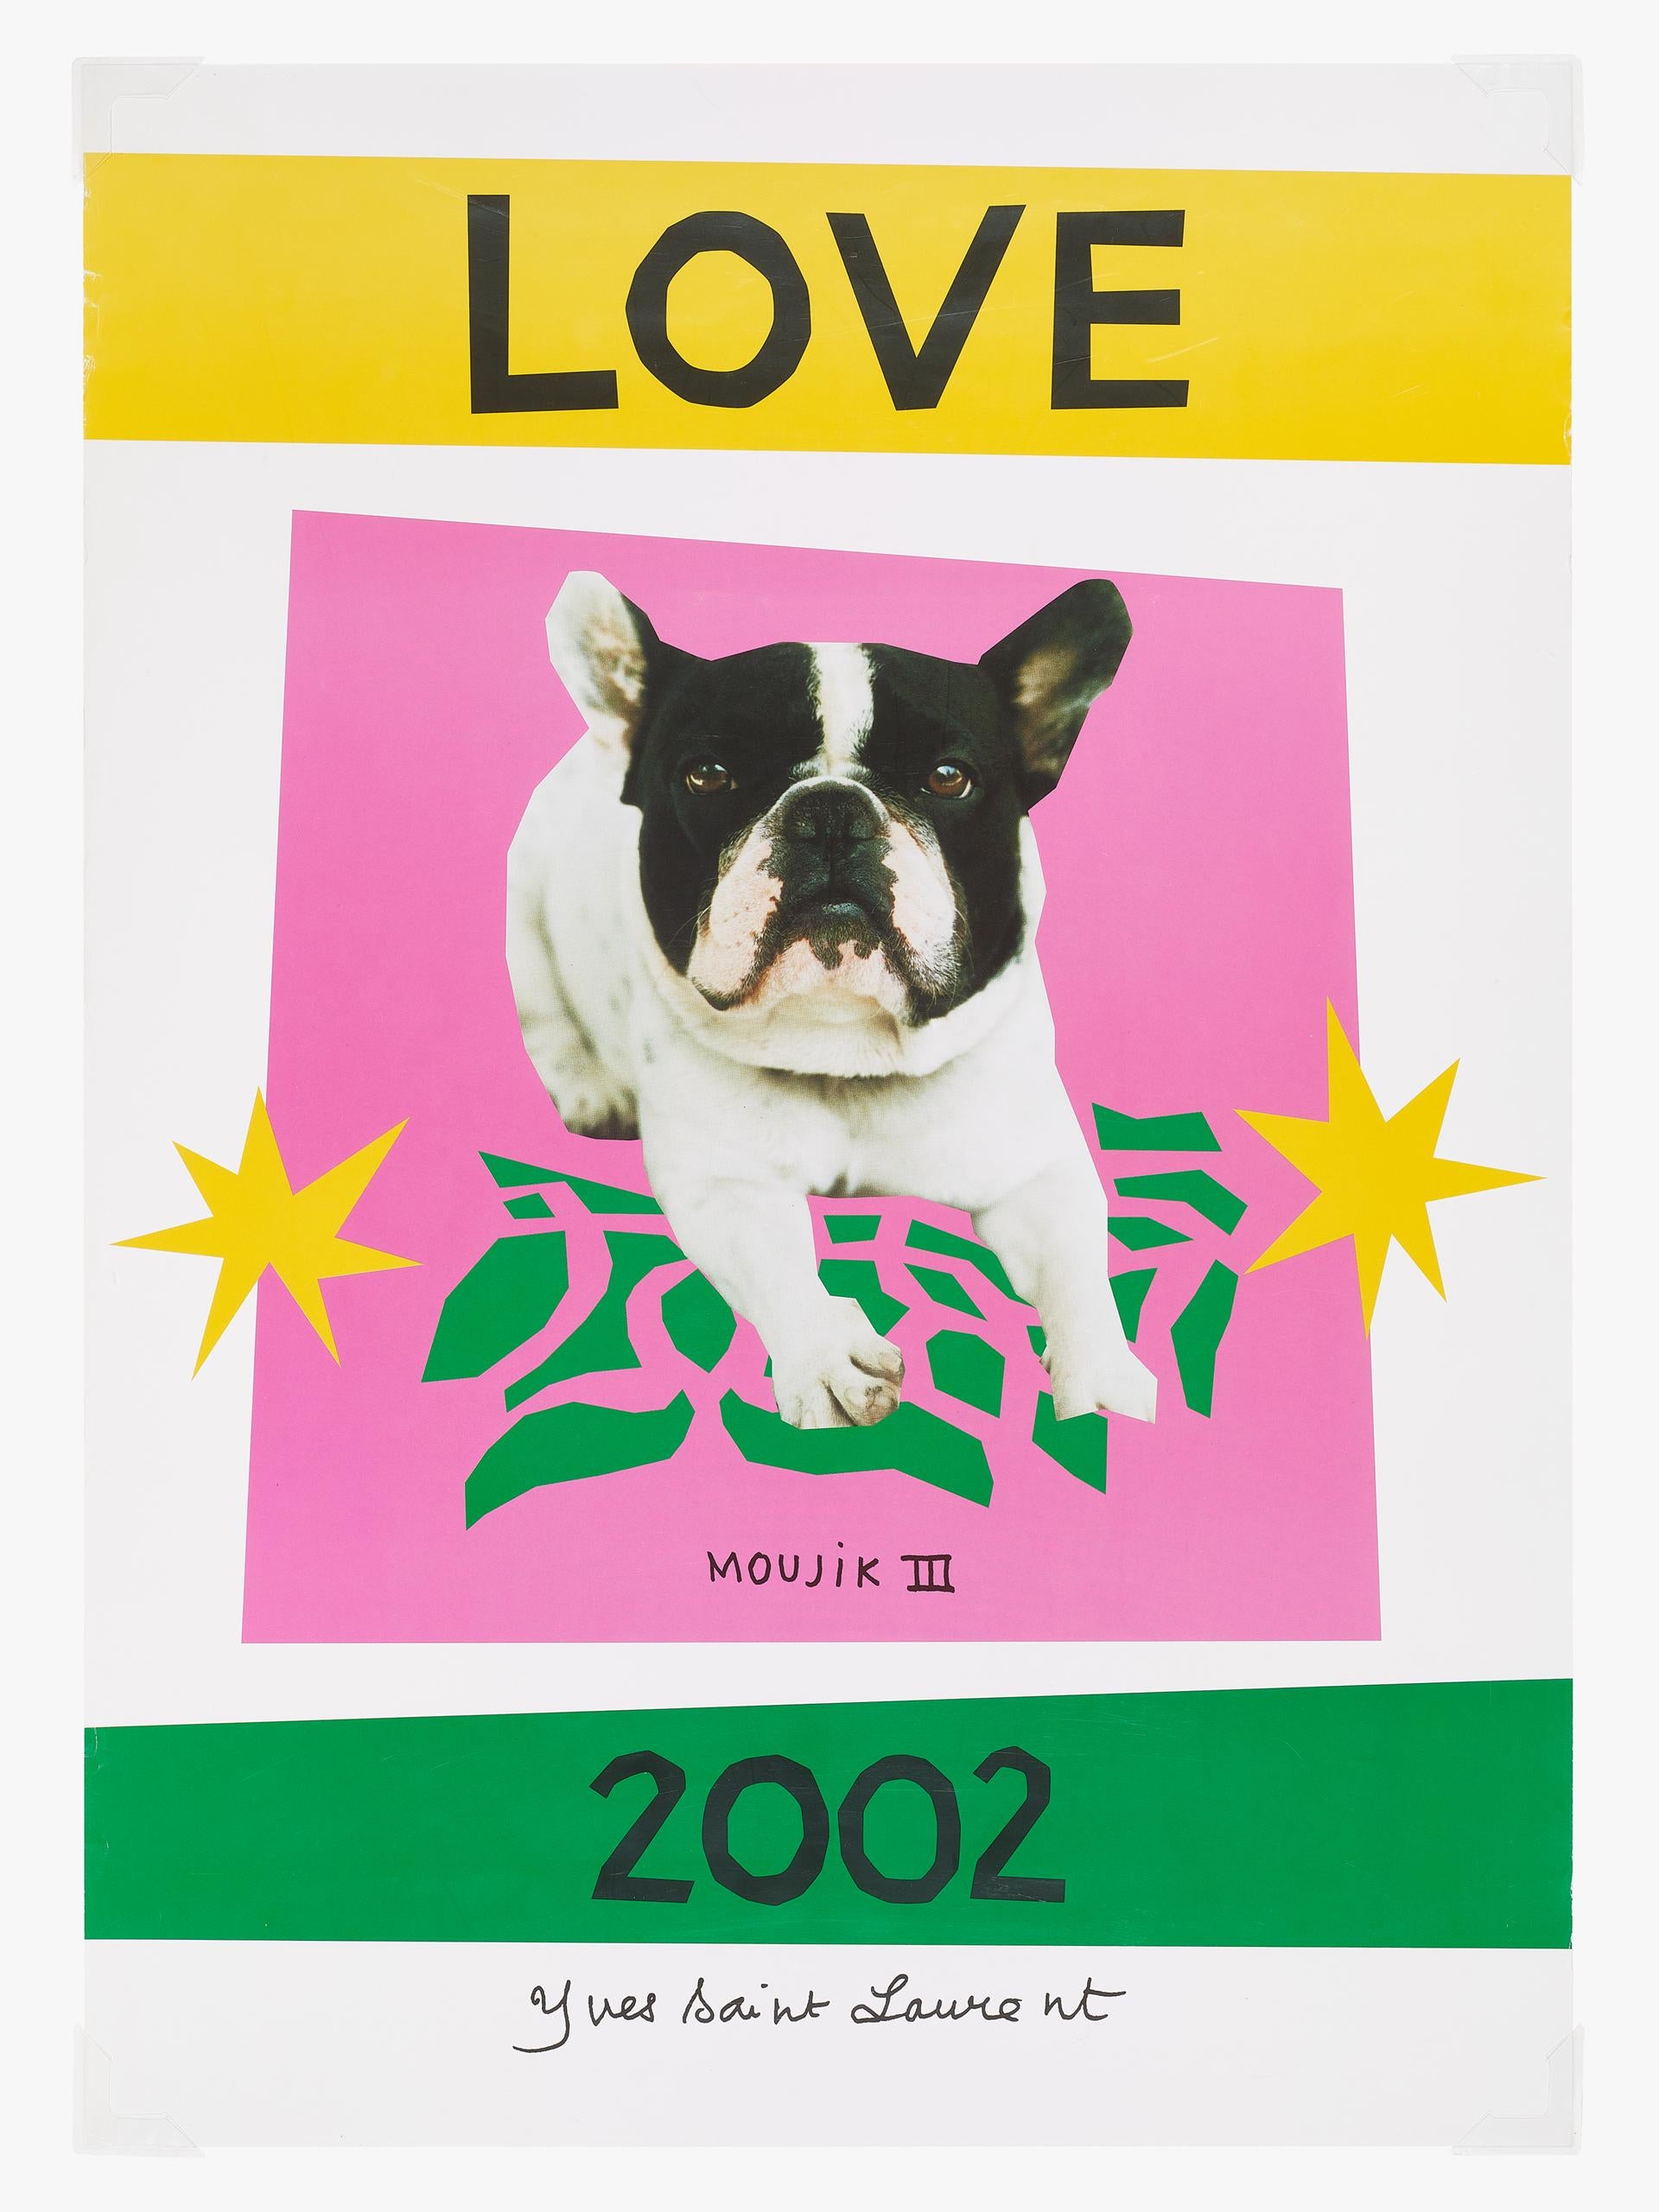 Yves Saint Laurent Animal Print - " LOVE " 2002